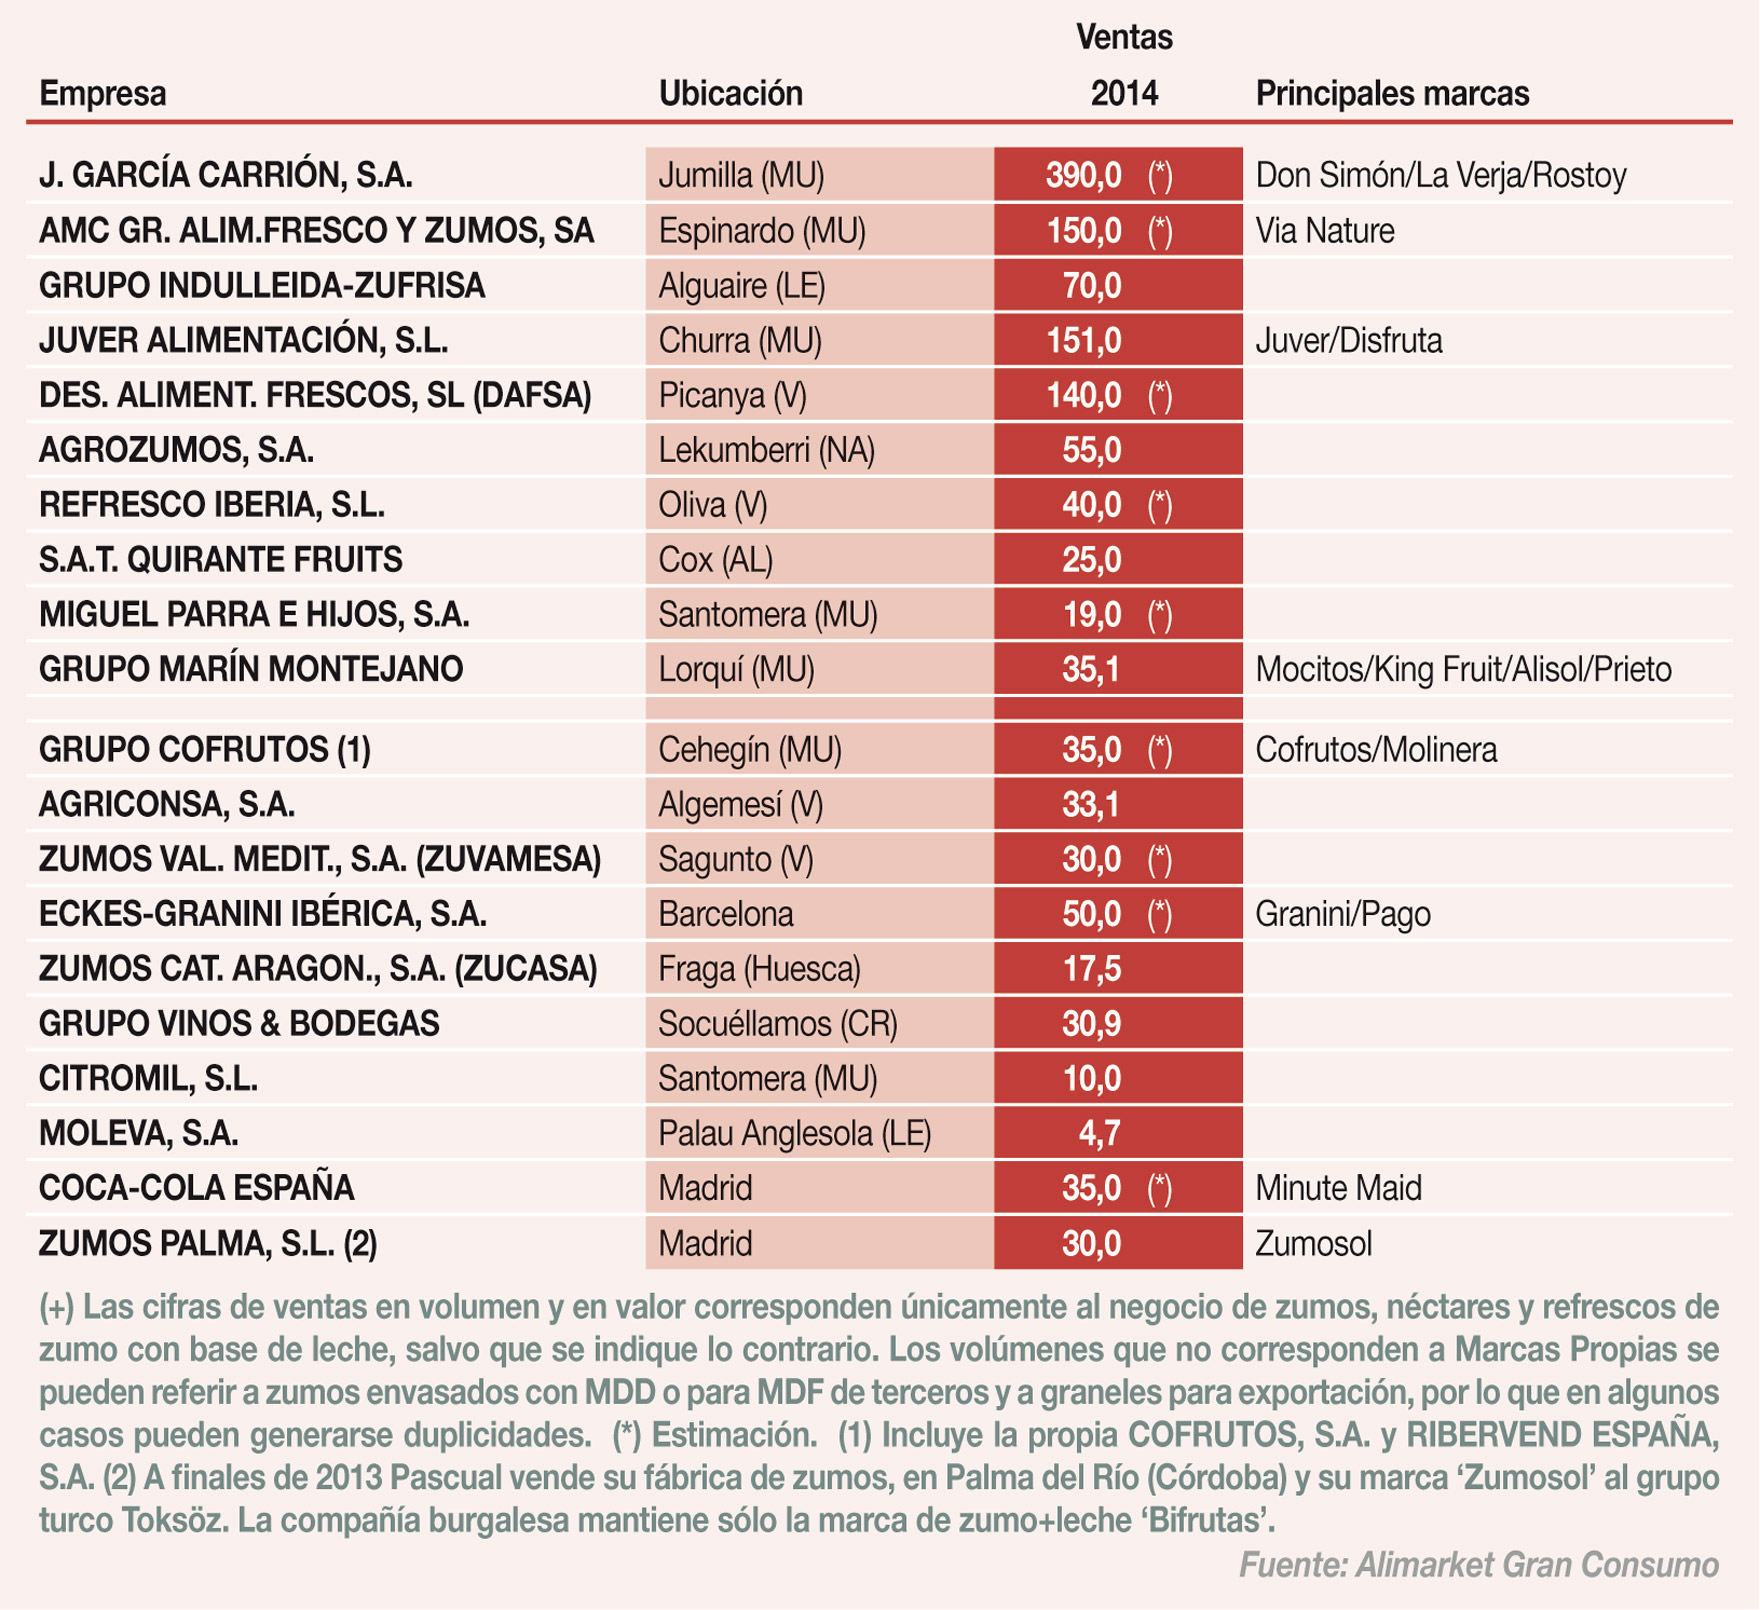 Ranking de empresas de zumos y néctares en España (+)